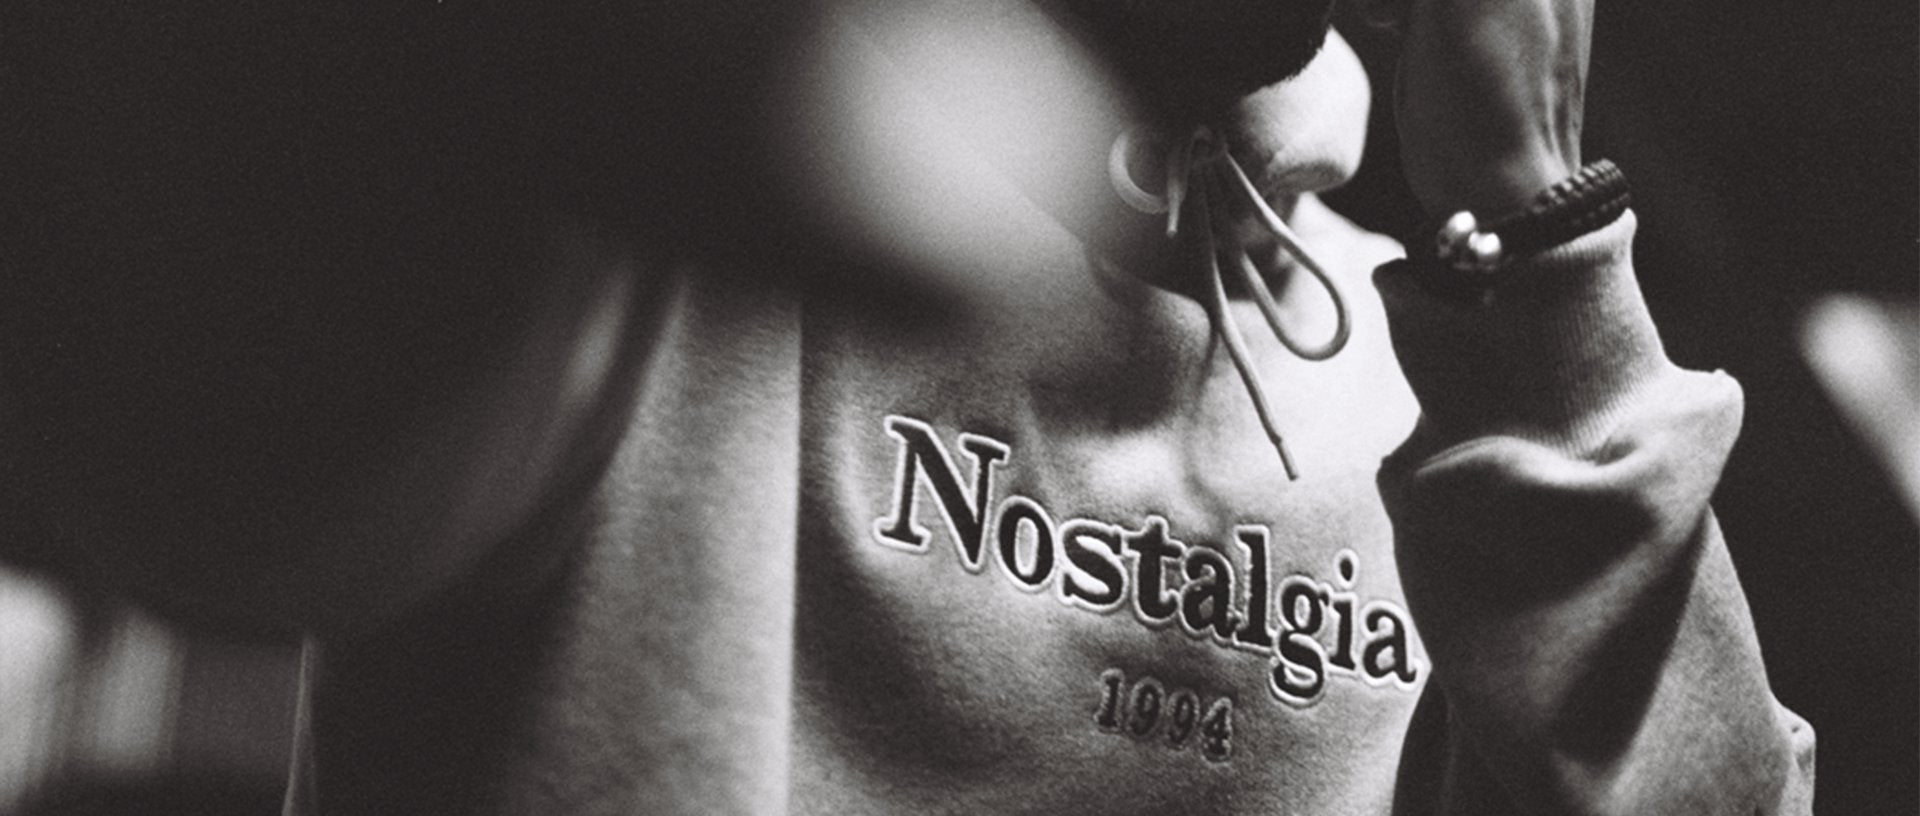 Usual Brand | Nostalgia 1994